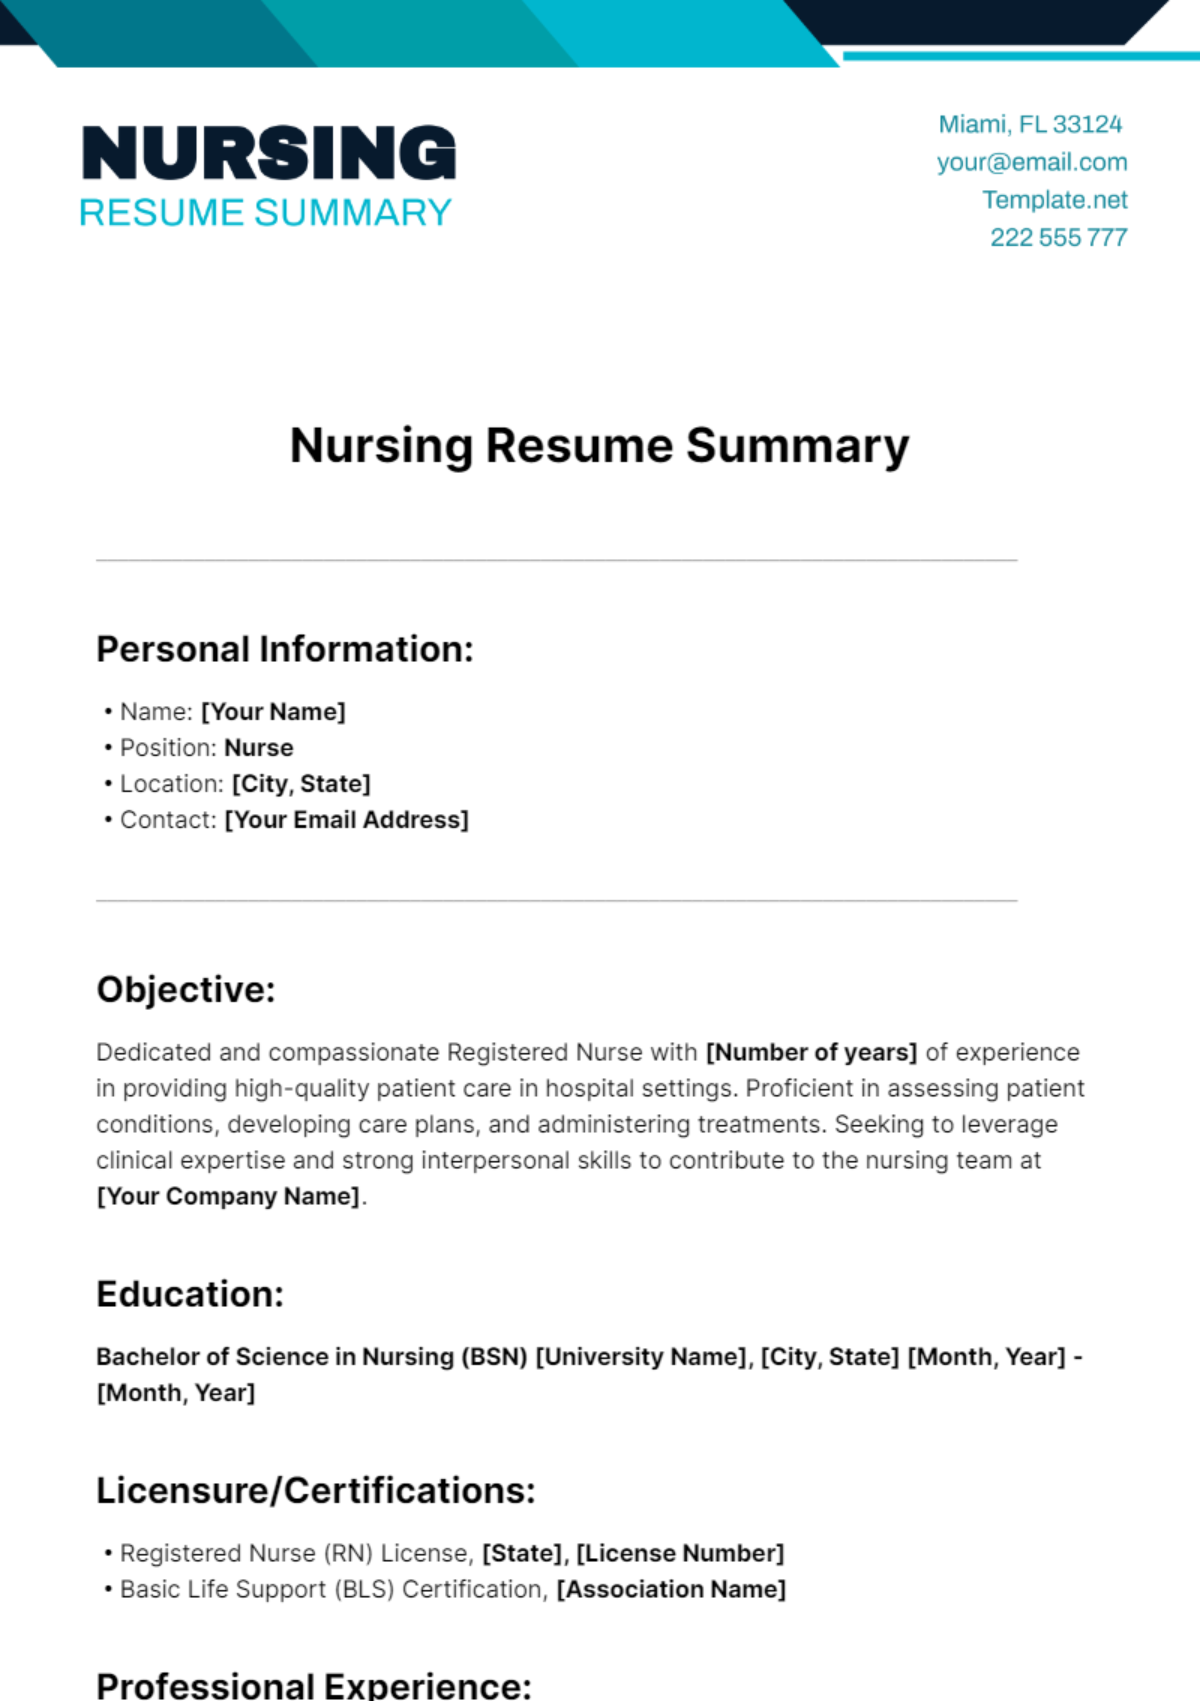 Nursing Resume Summary Template